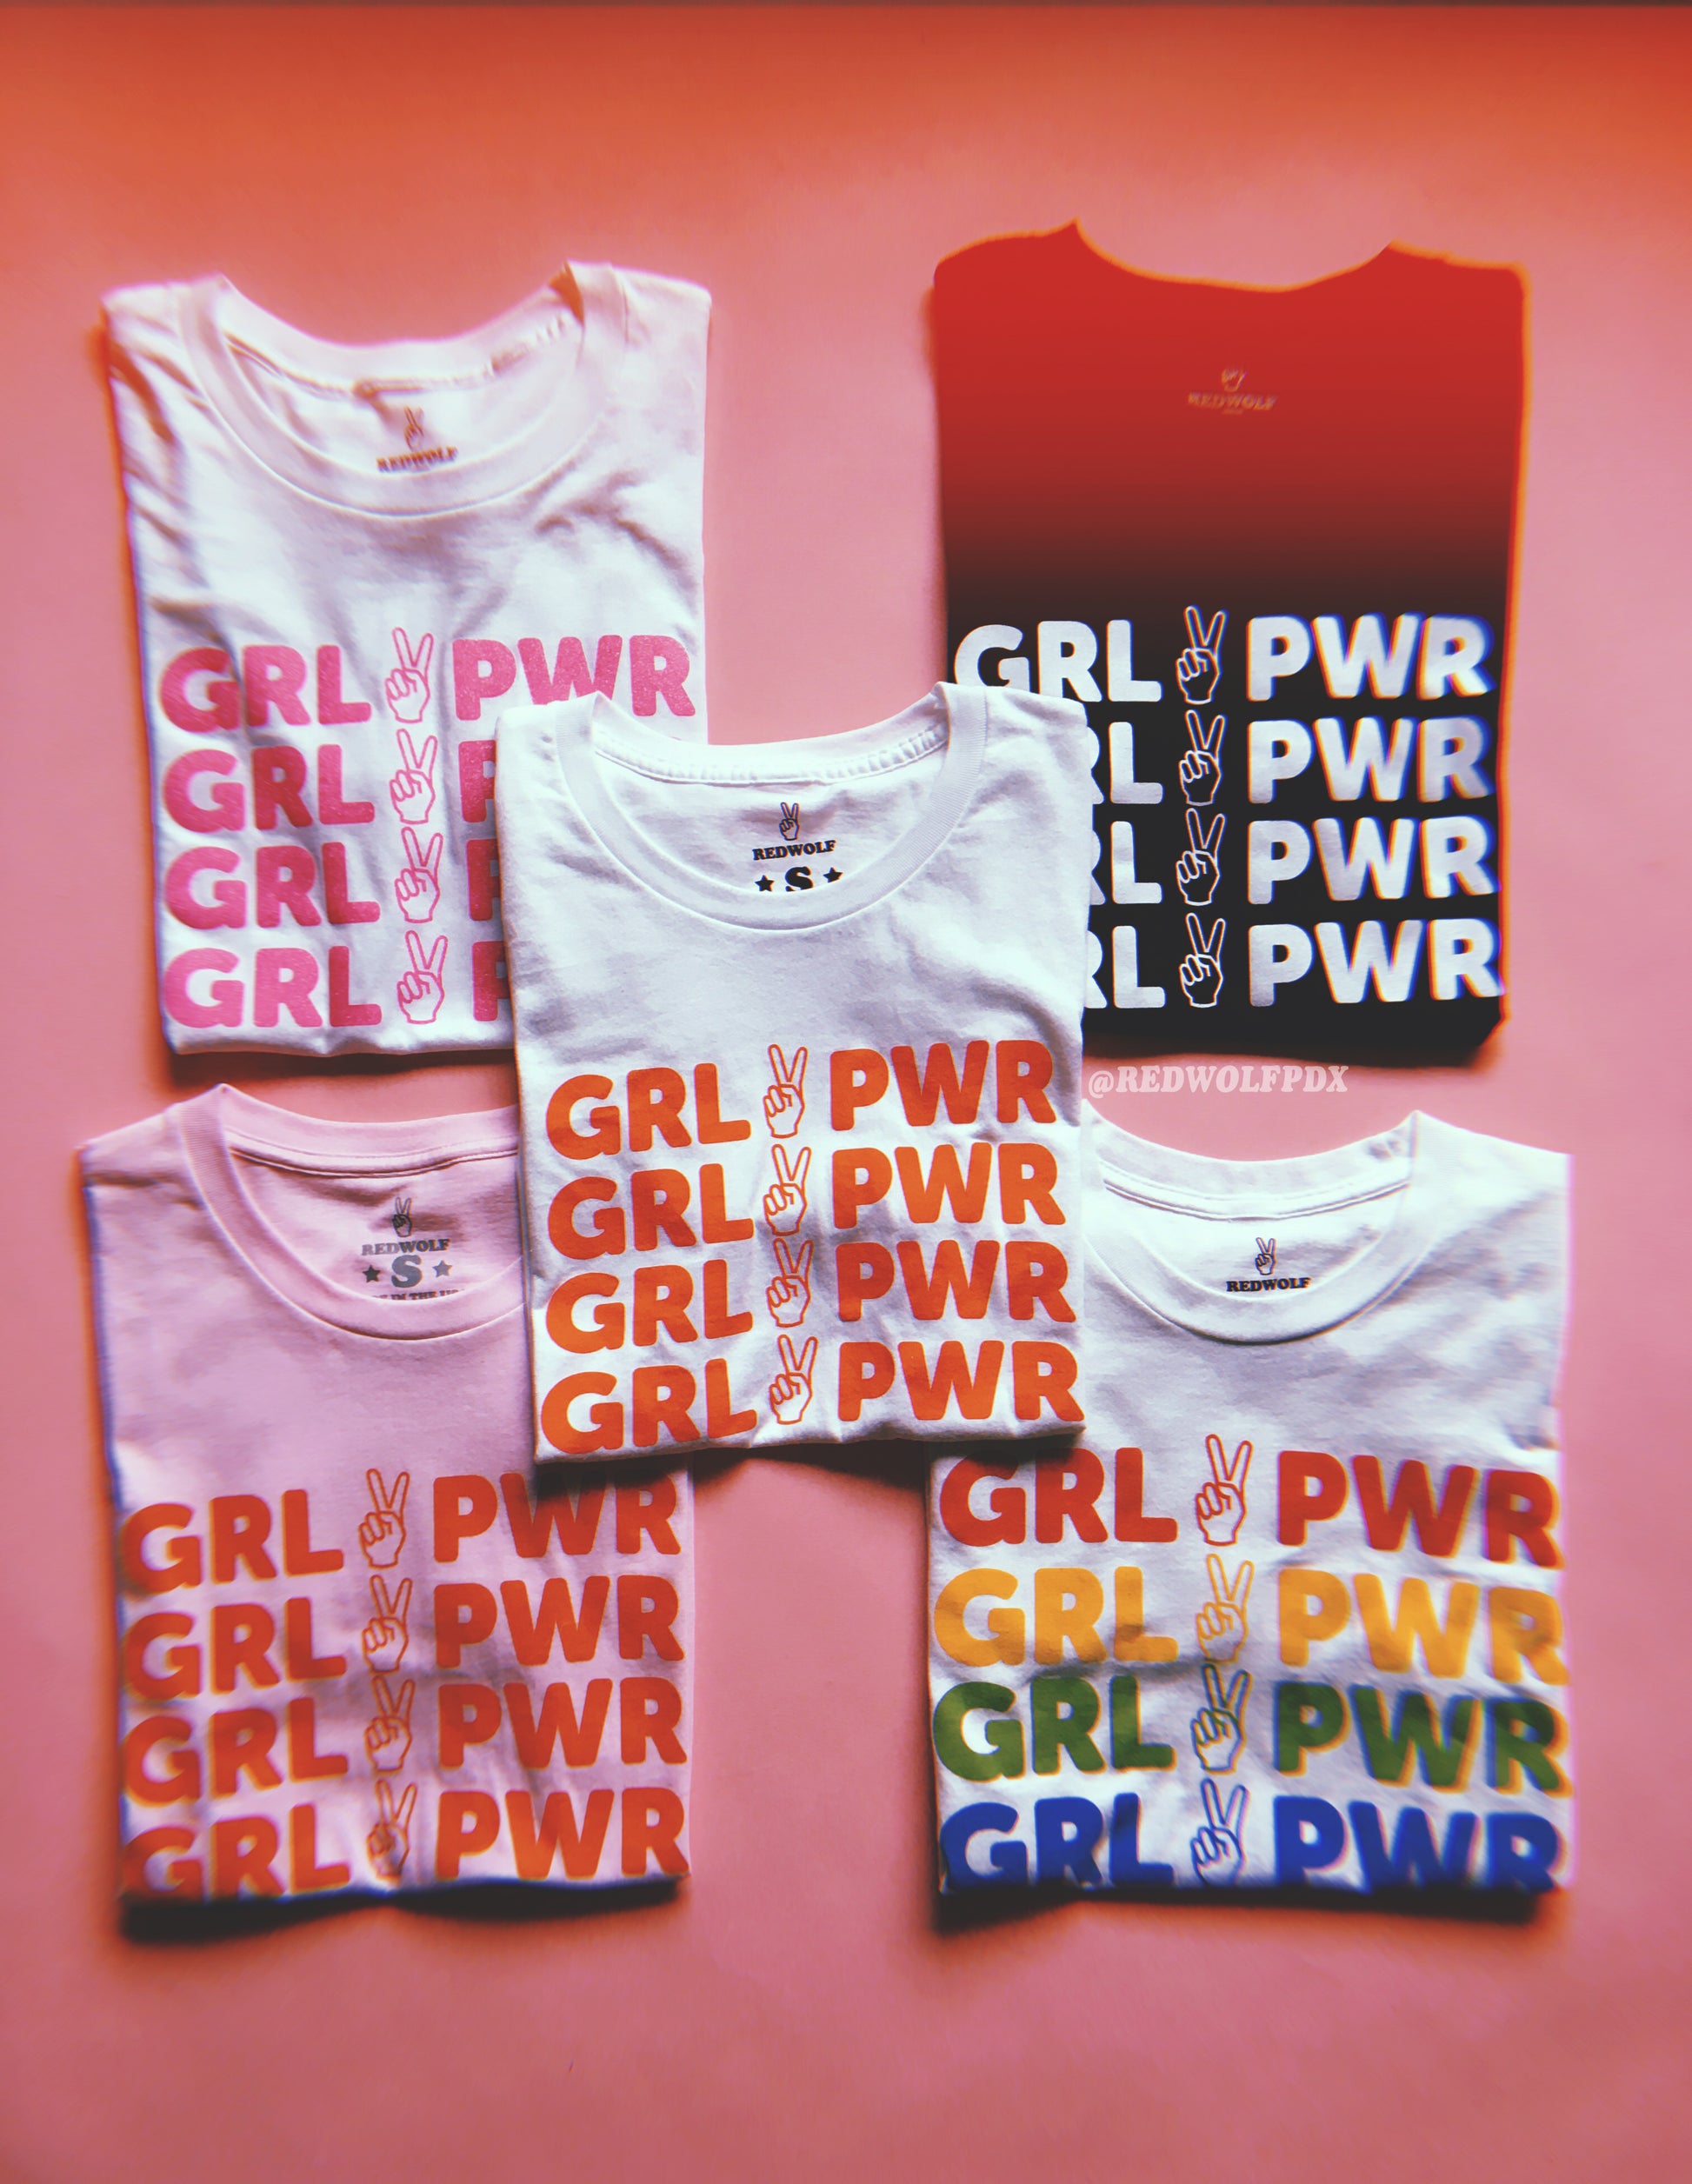   - Girl Power Tee - Pink - REDWOLF